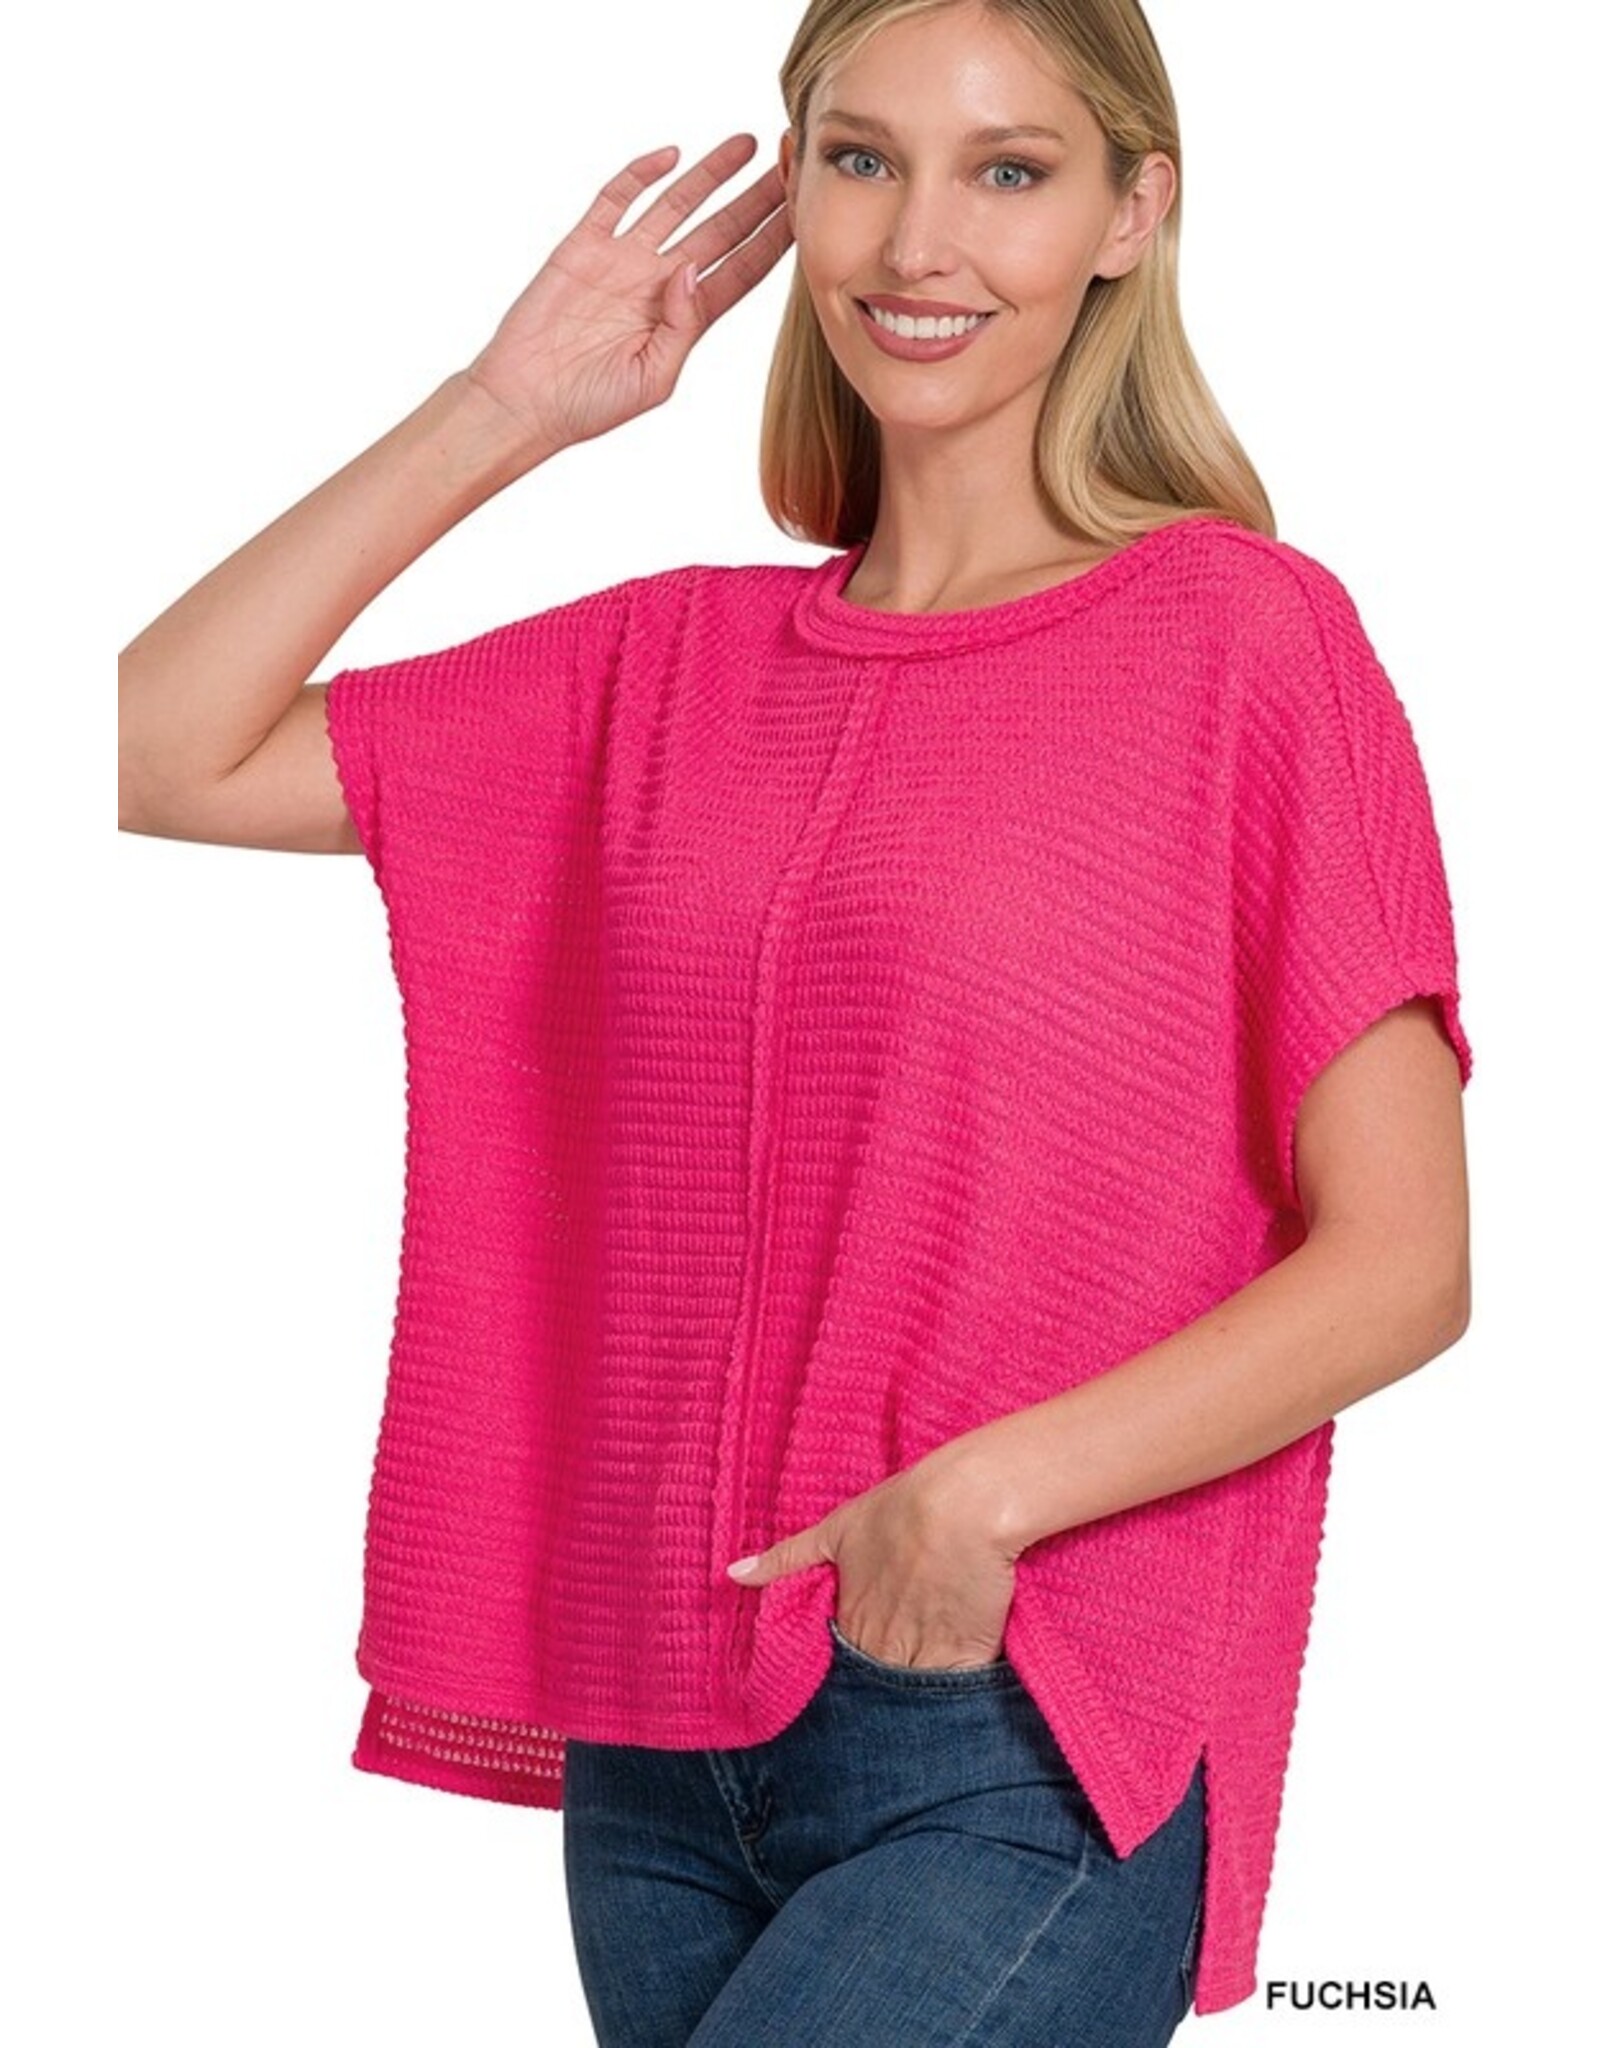 Zenana Premium Hot Pink Short Sleeve Jacquard Sweater